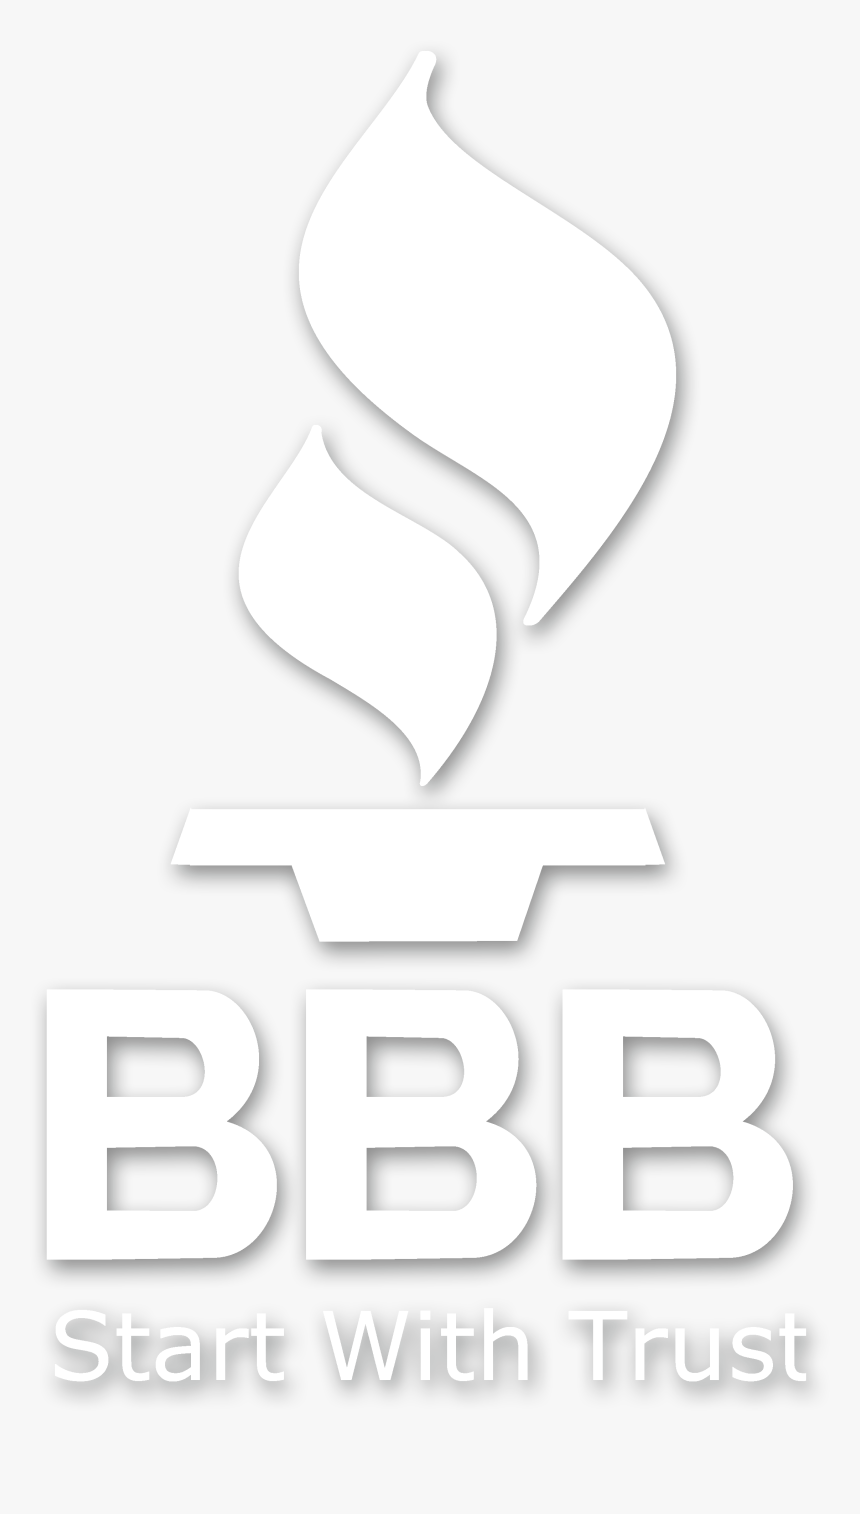 Transparent Better Business Bureau Logo Png - Construmarket, Png Download, Free Download